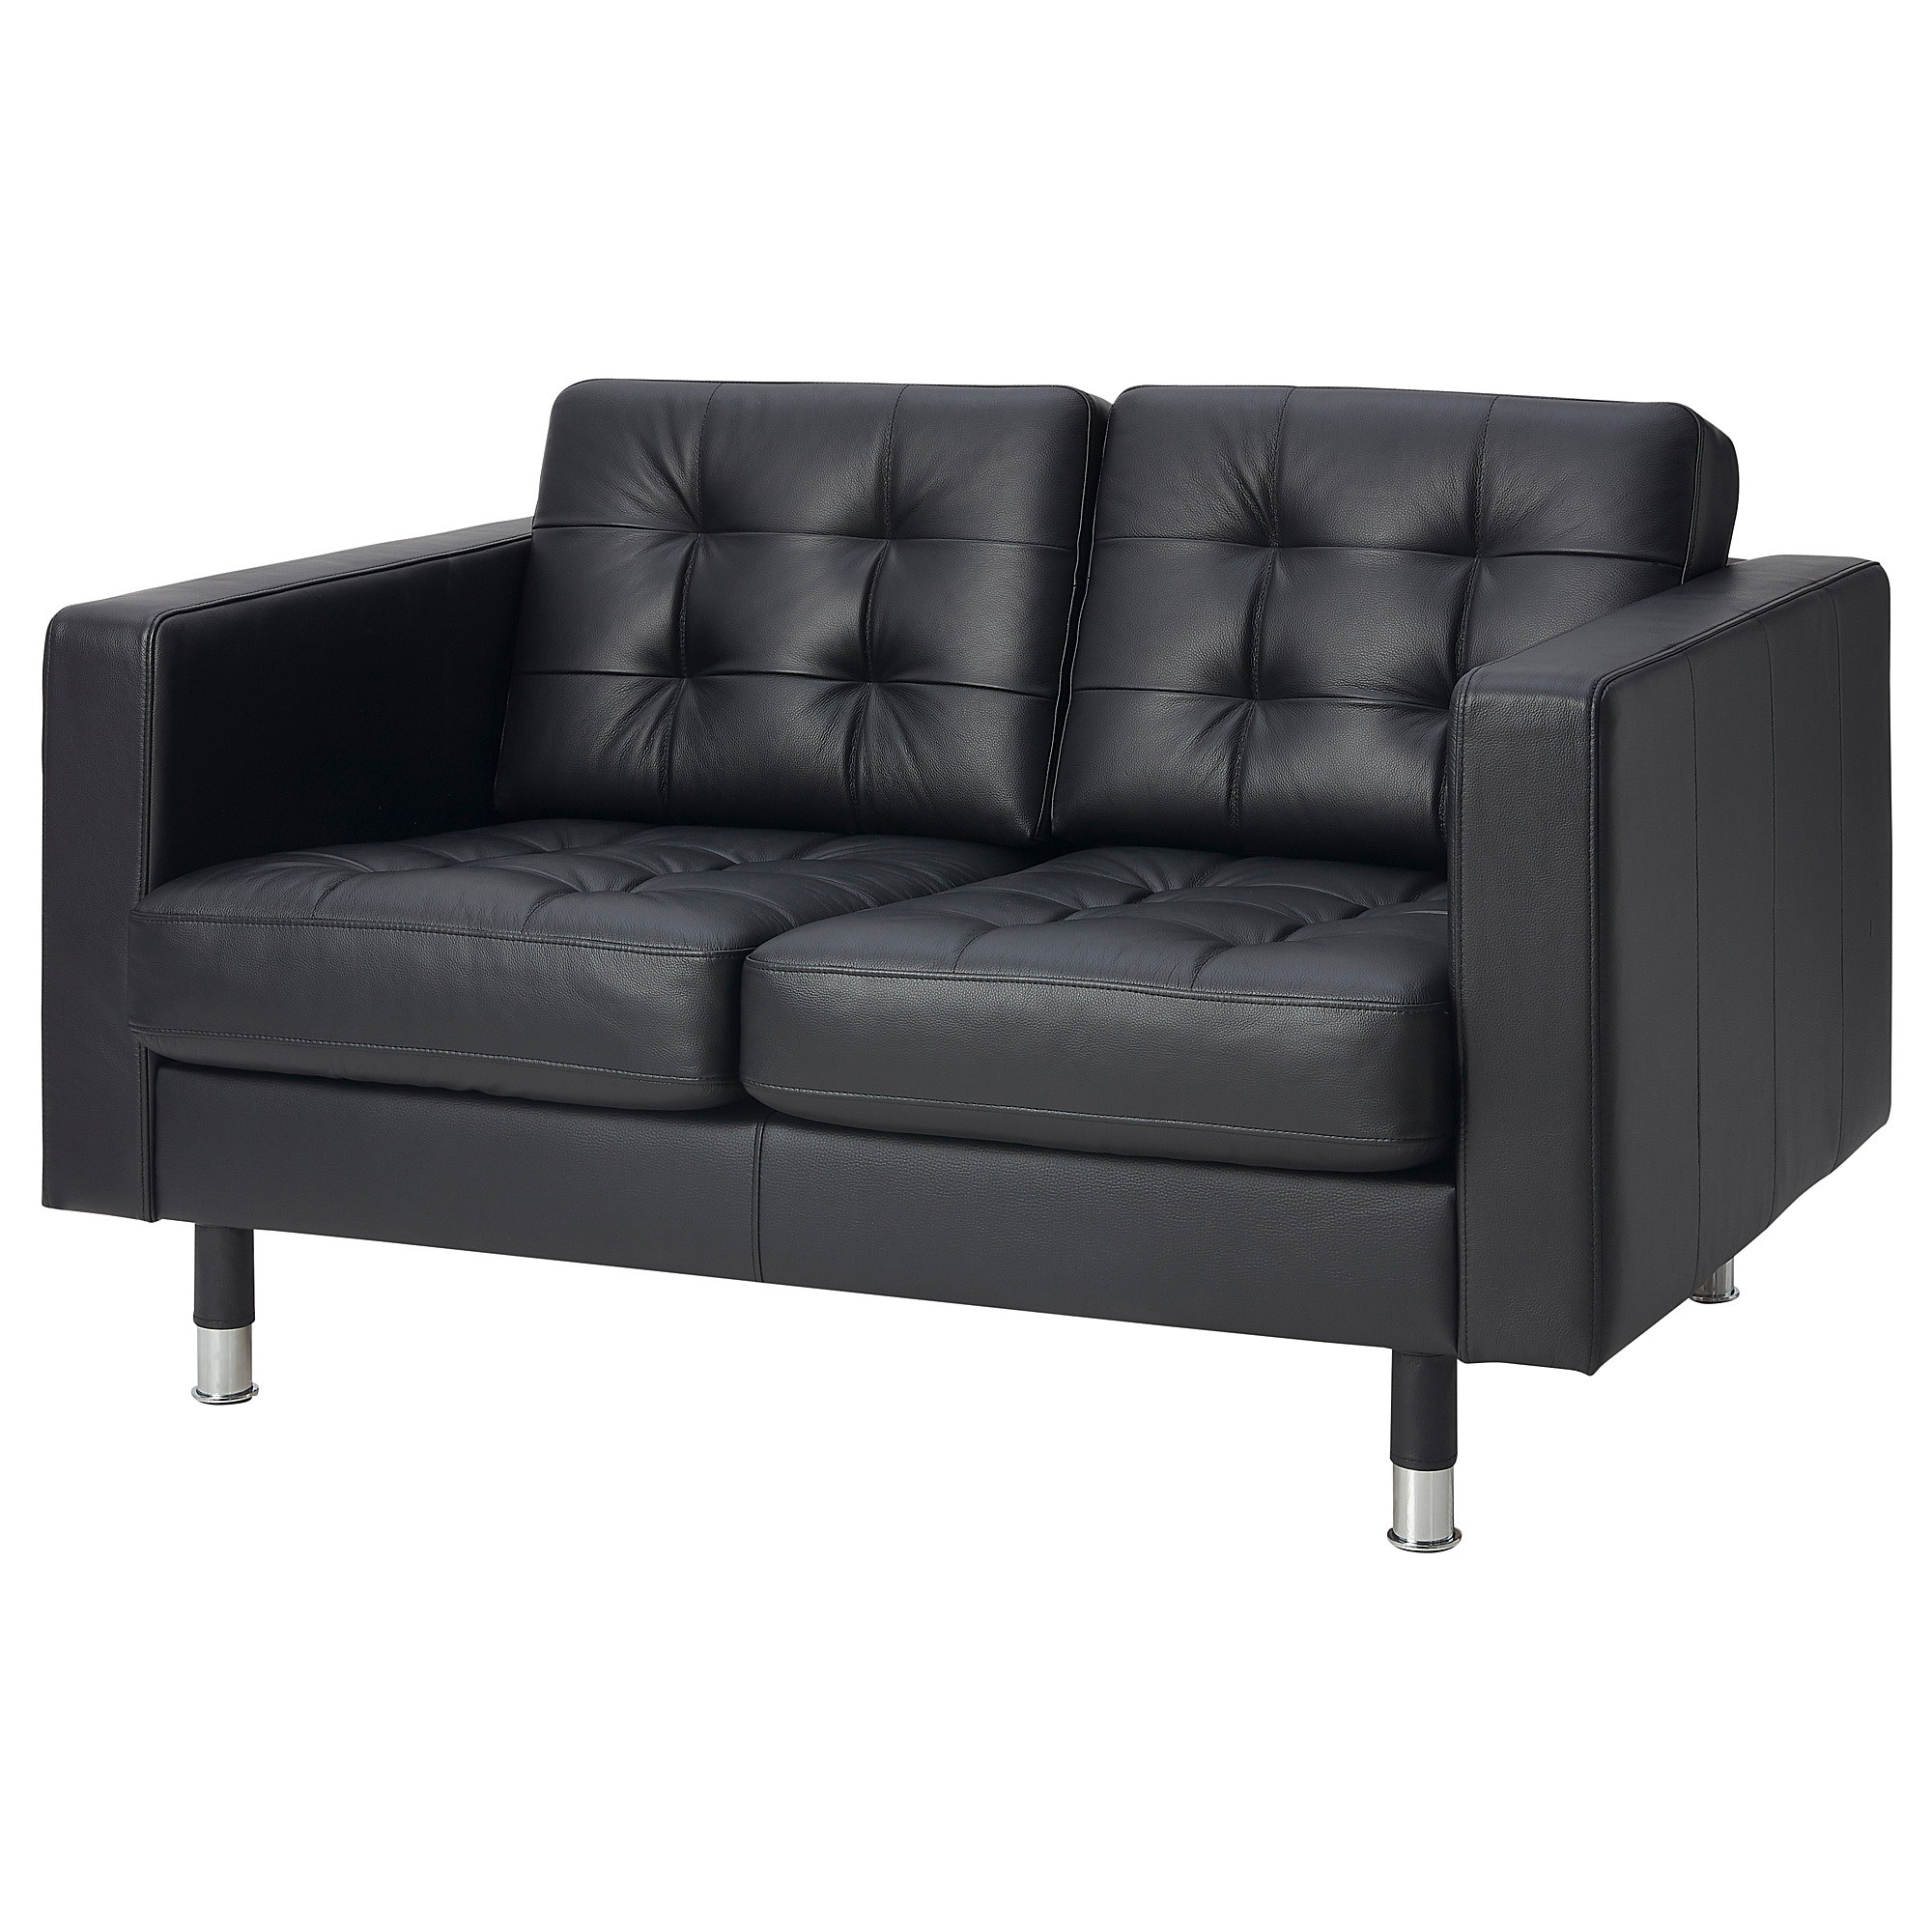 LANDSKRONA compact 2-seat sofa